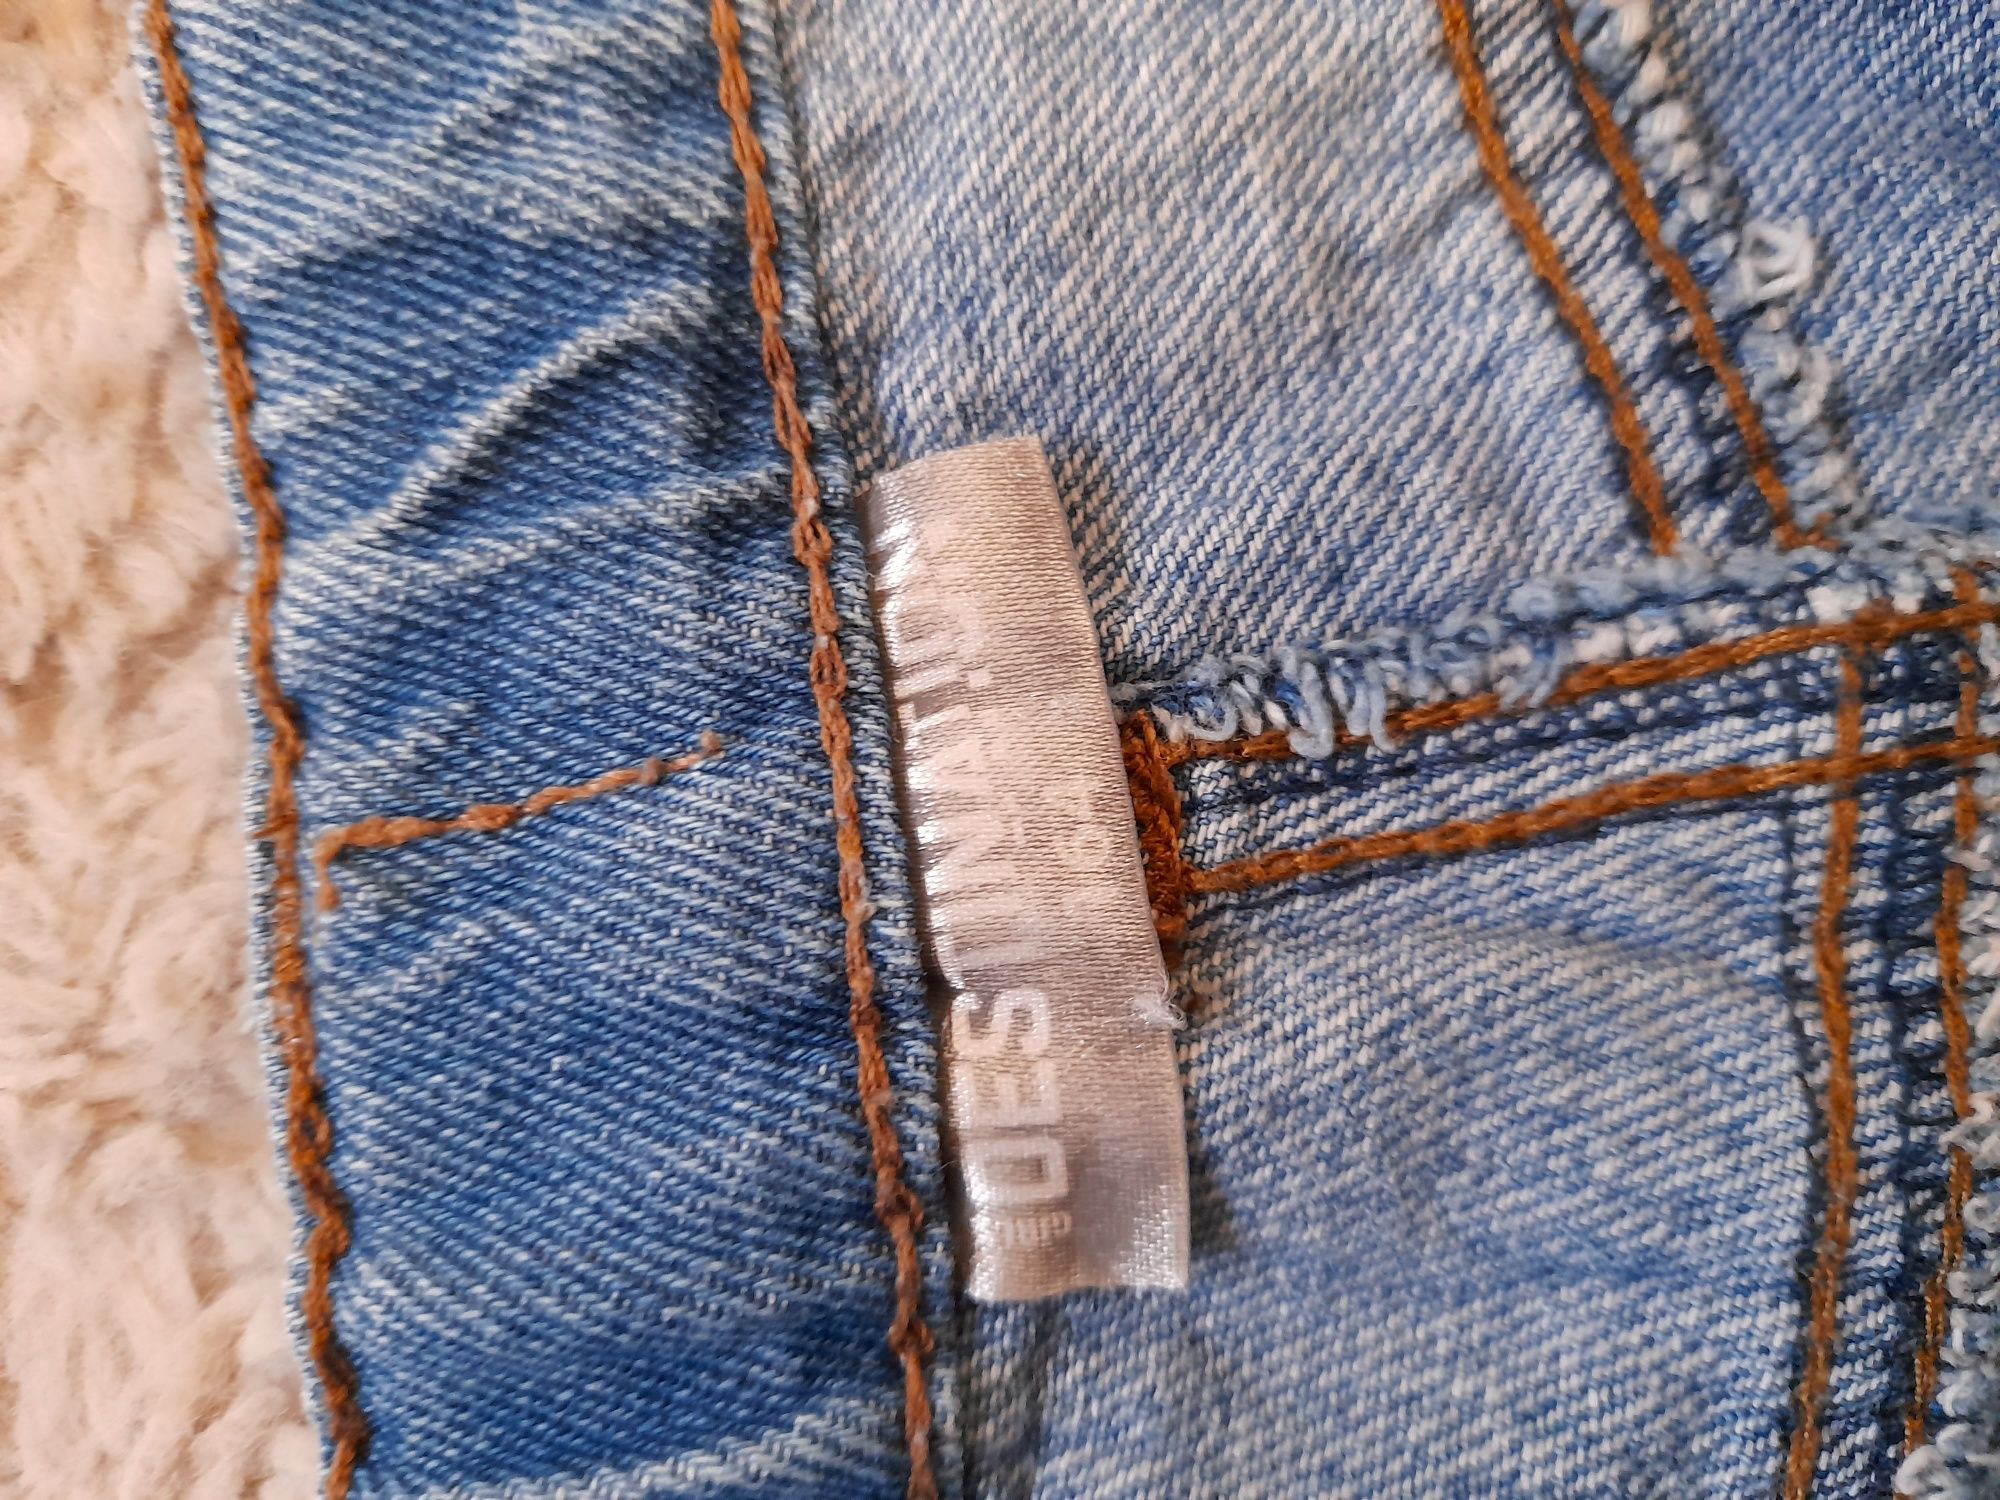 Spodnie jeans r.164